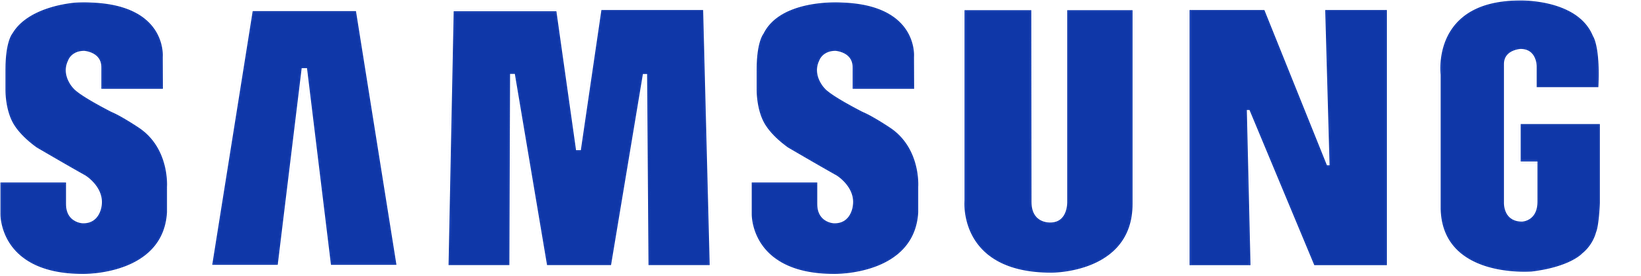 Samsung logo PNG Imags HD